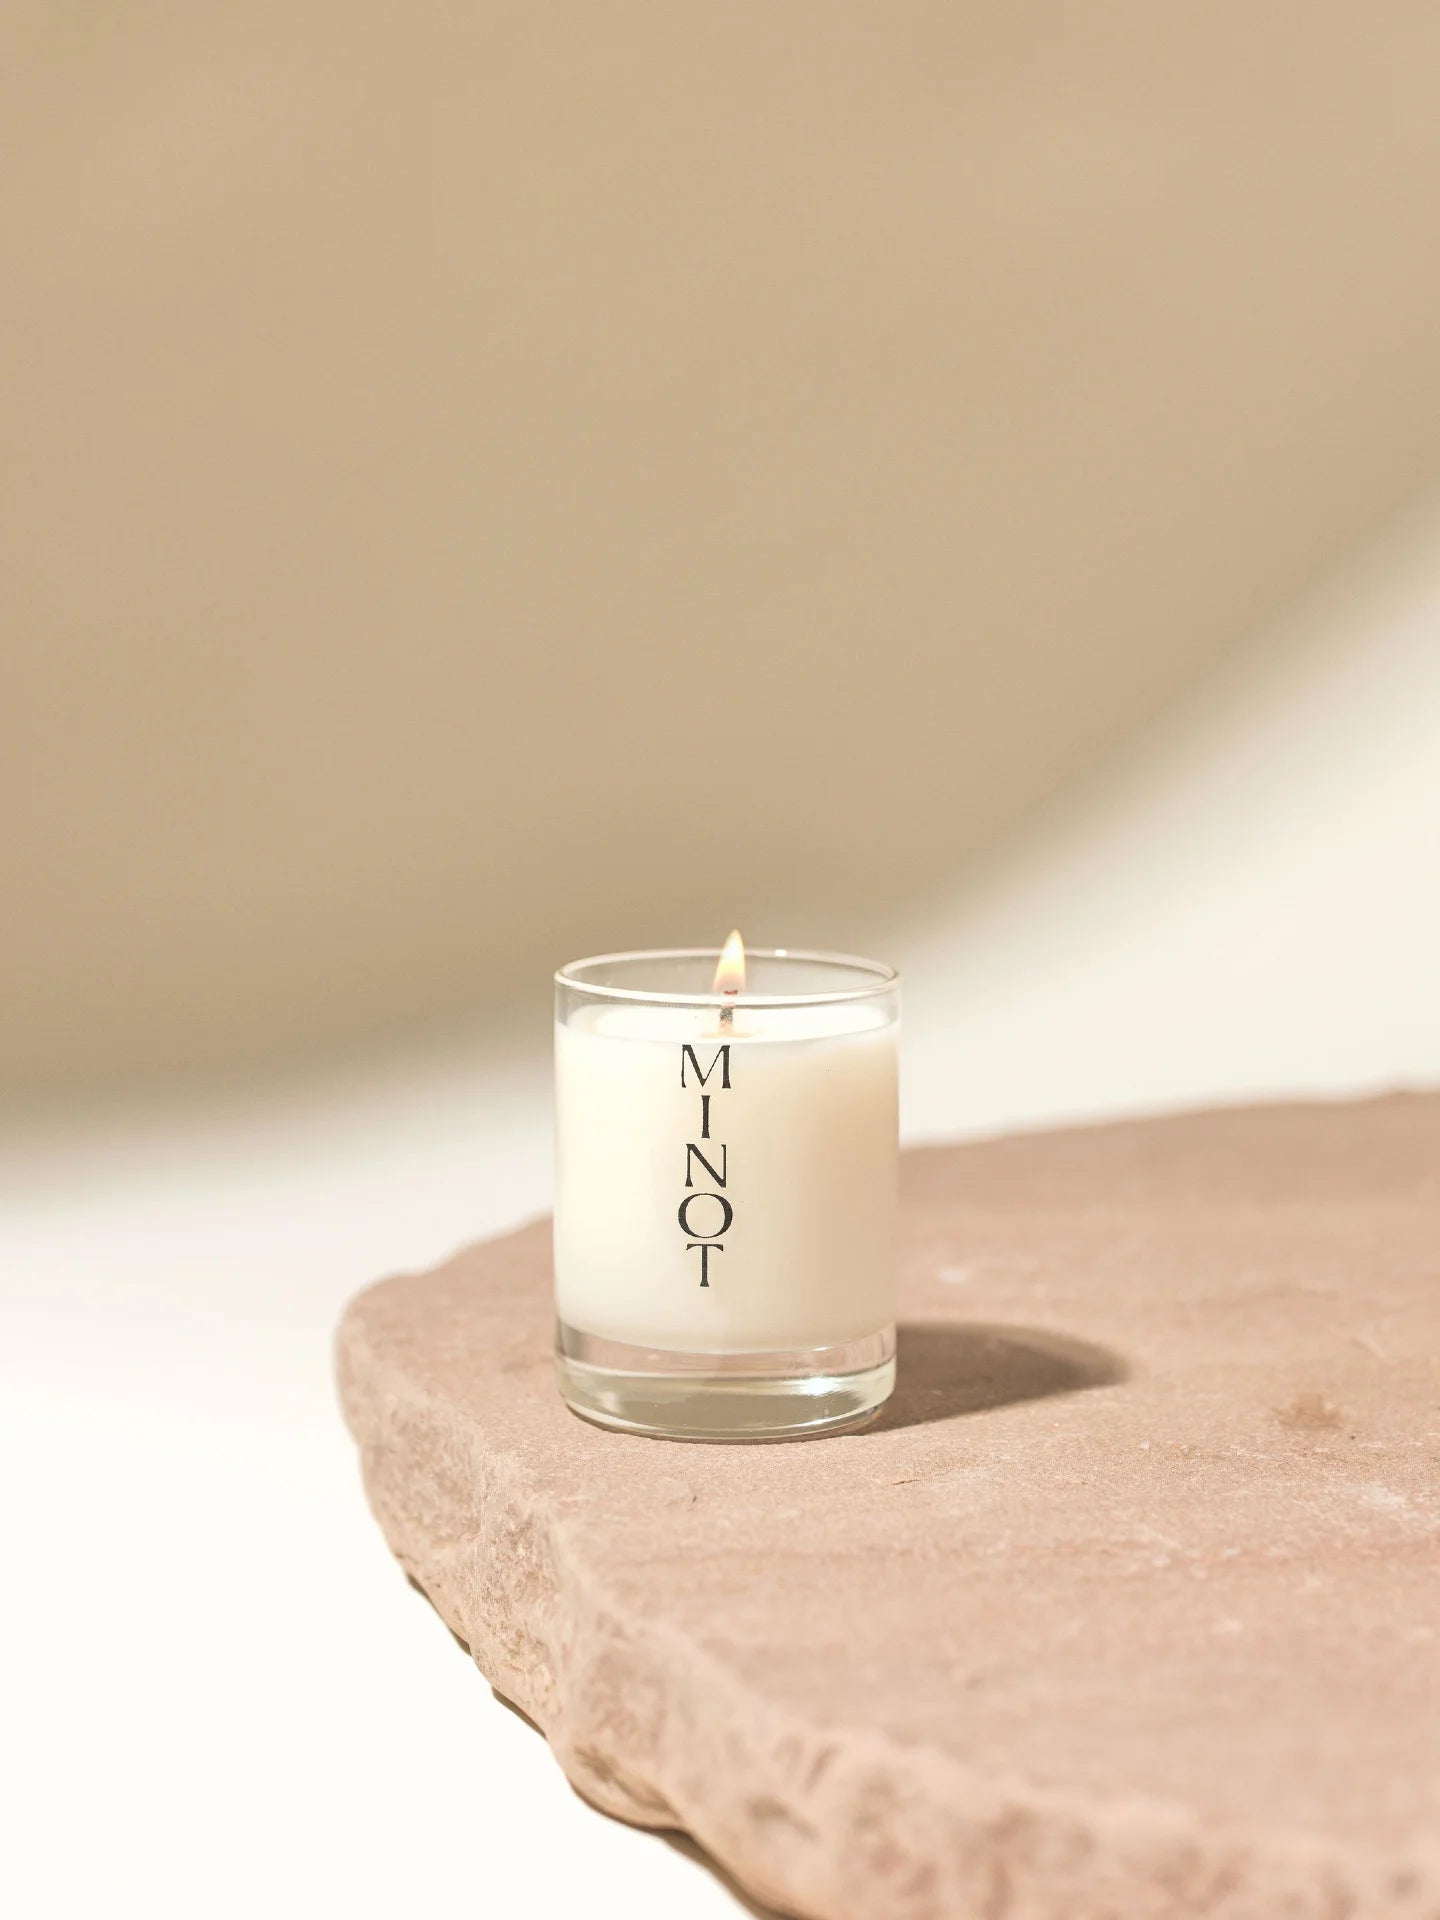 The vegan Luna Mini travel candle offers a sensual scent blend of mandarin, sandalwood, and jasmine